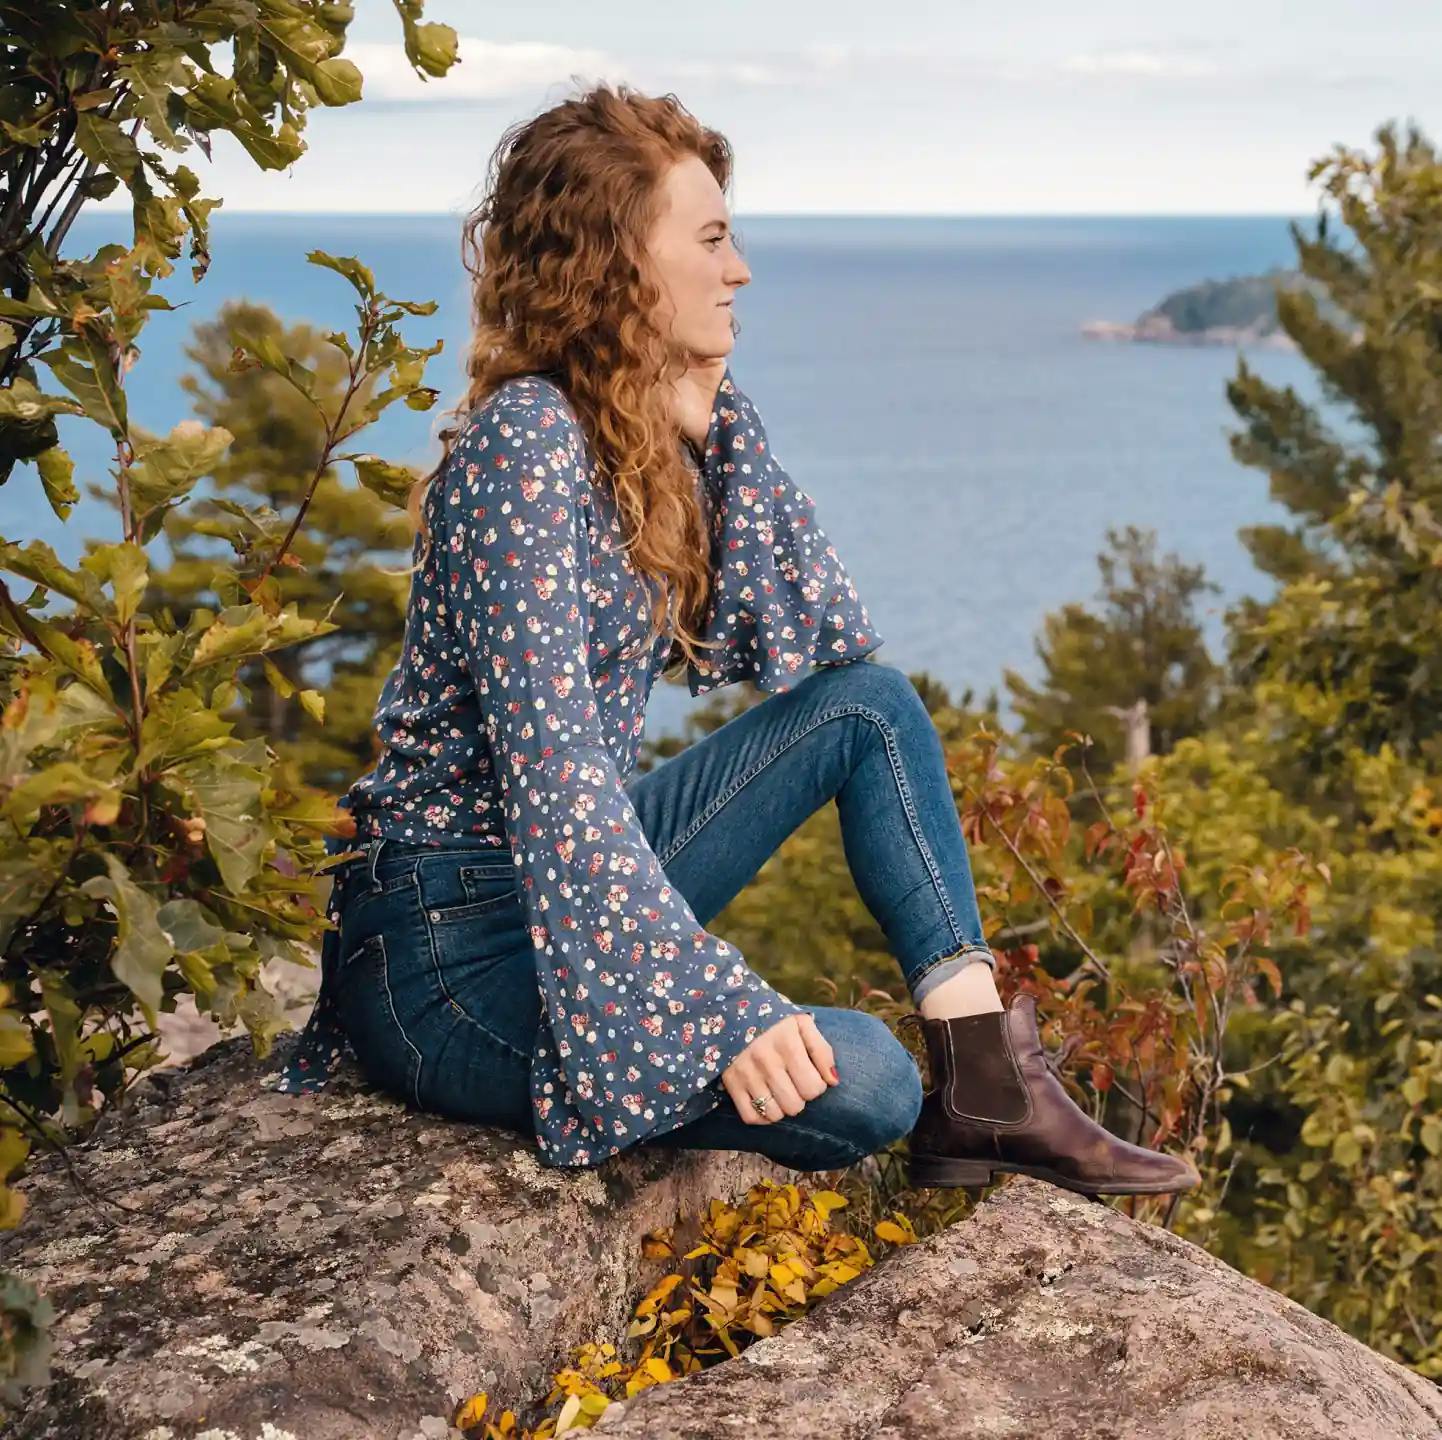 Woman sitting on a rock